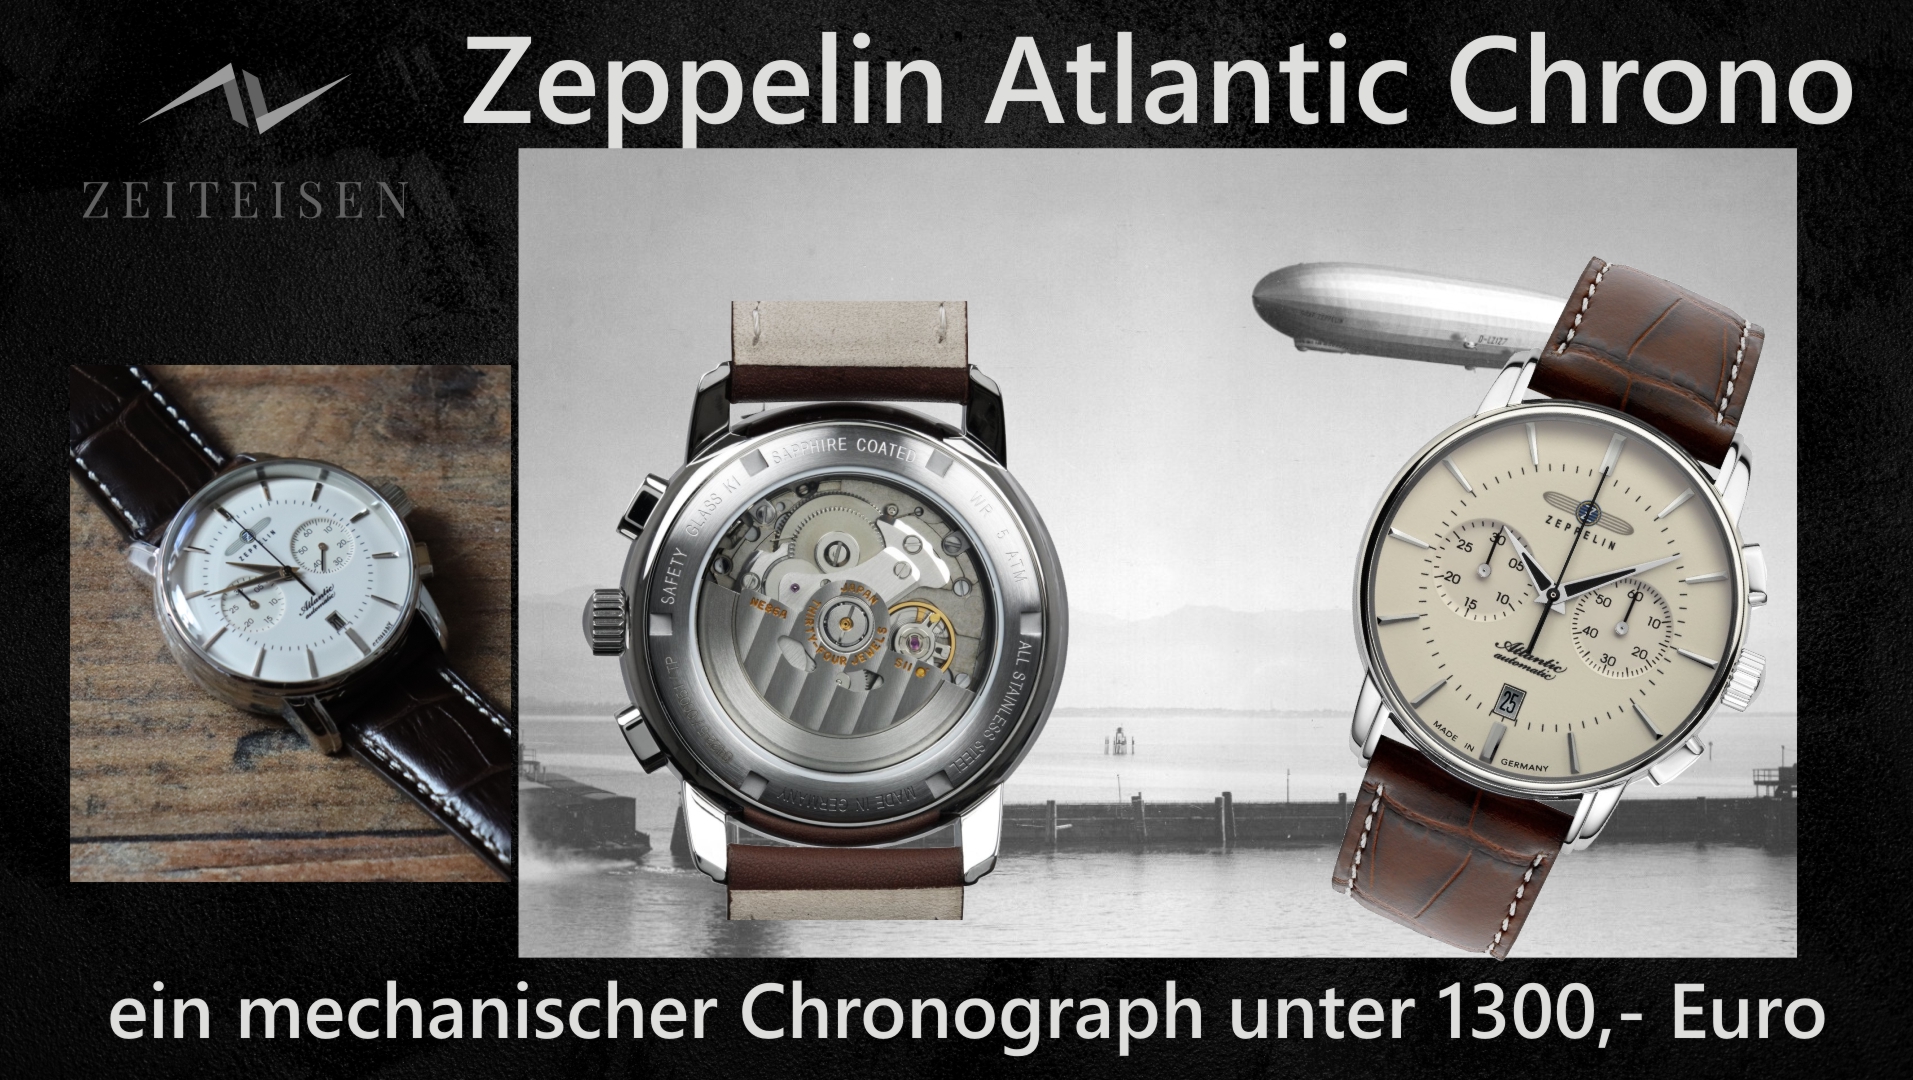 Video Review zur Zeppelin Atlantic Chronograph